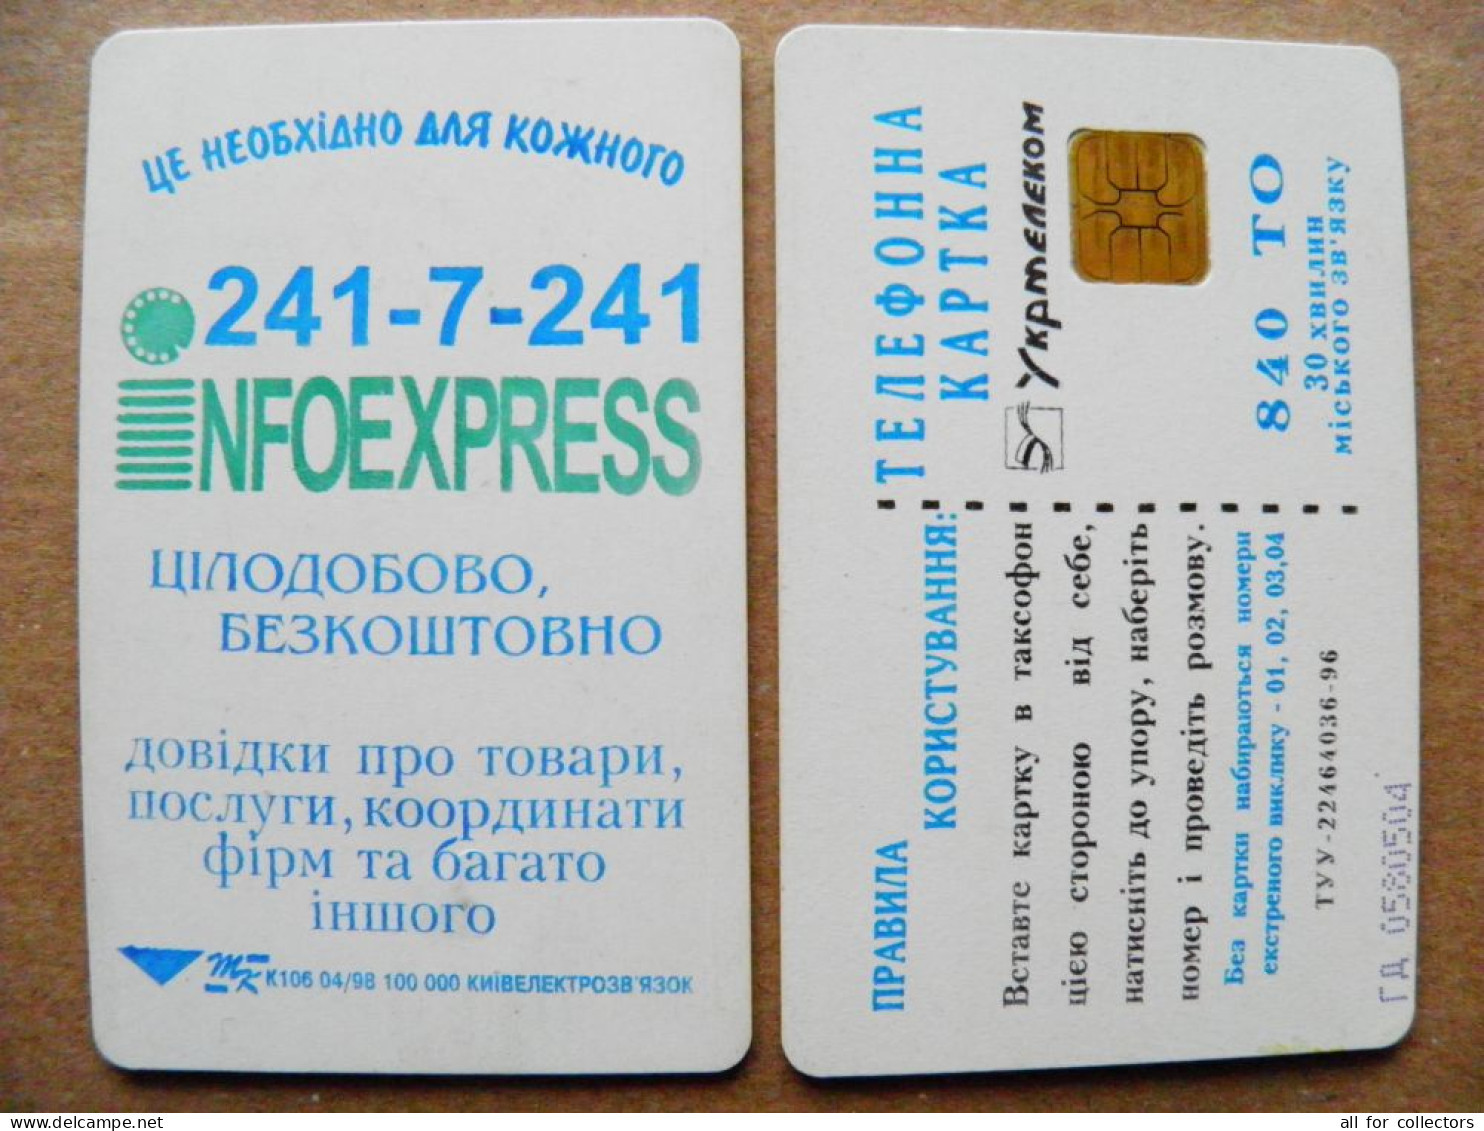 Phonecard Chip Advertising Infoexpress K106 04/98 100,000ex. 840 Units Prefix Nr.GD (in Cyrillic) UKRAINE - Ukraine